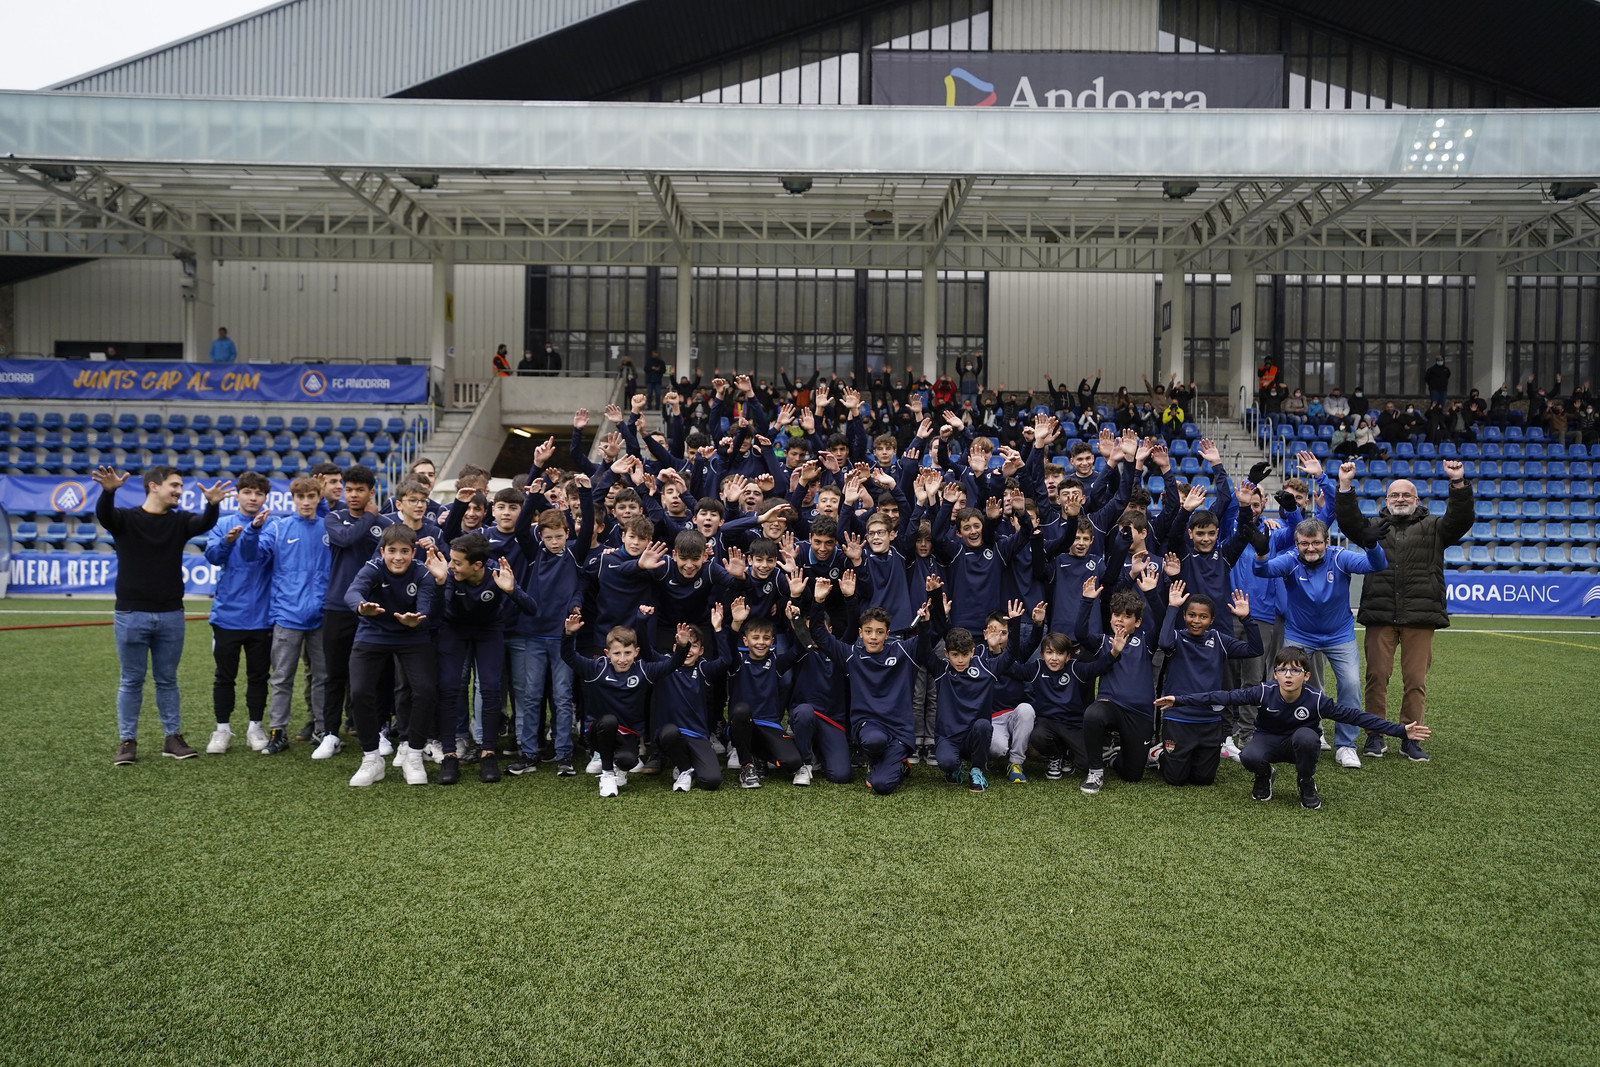 FC Andorra youth